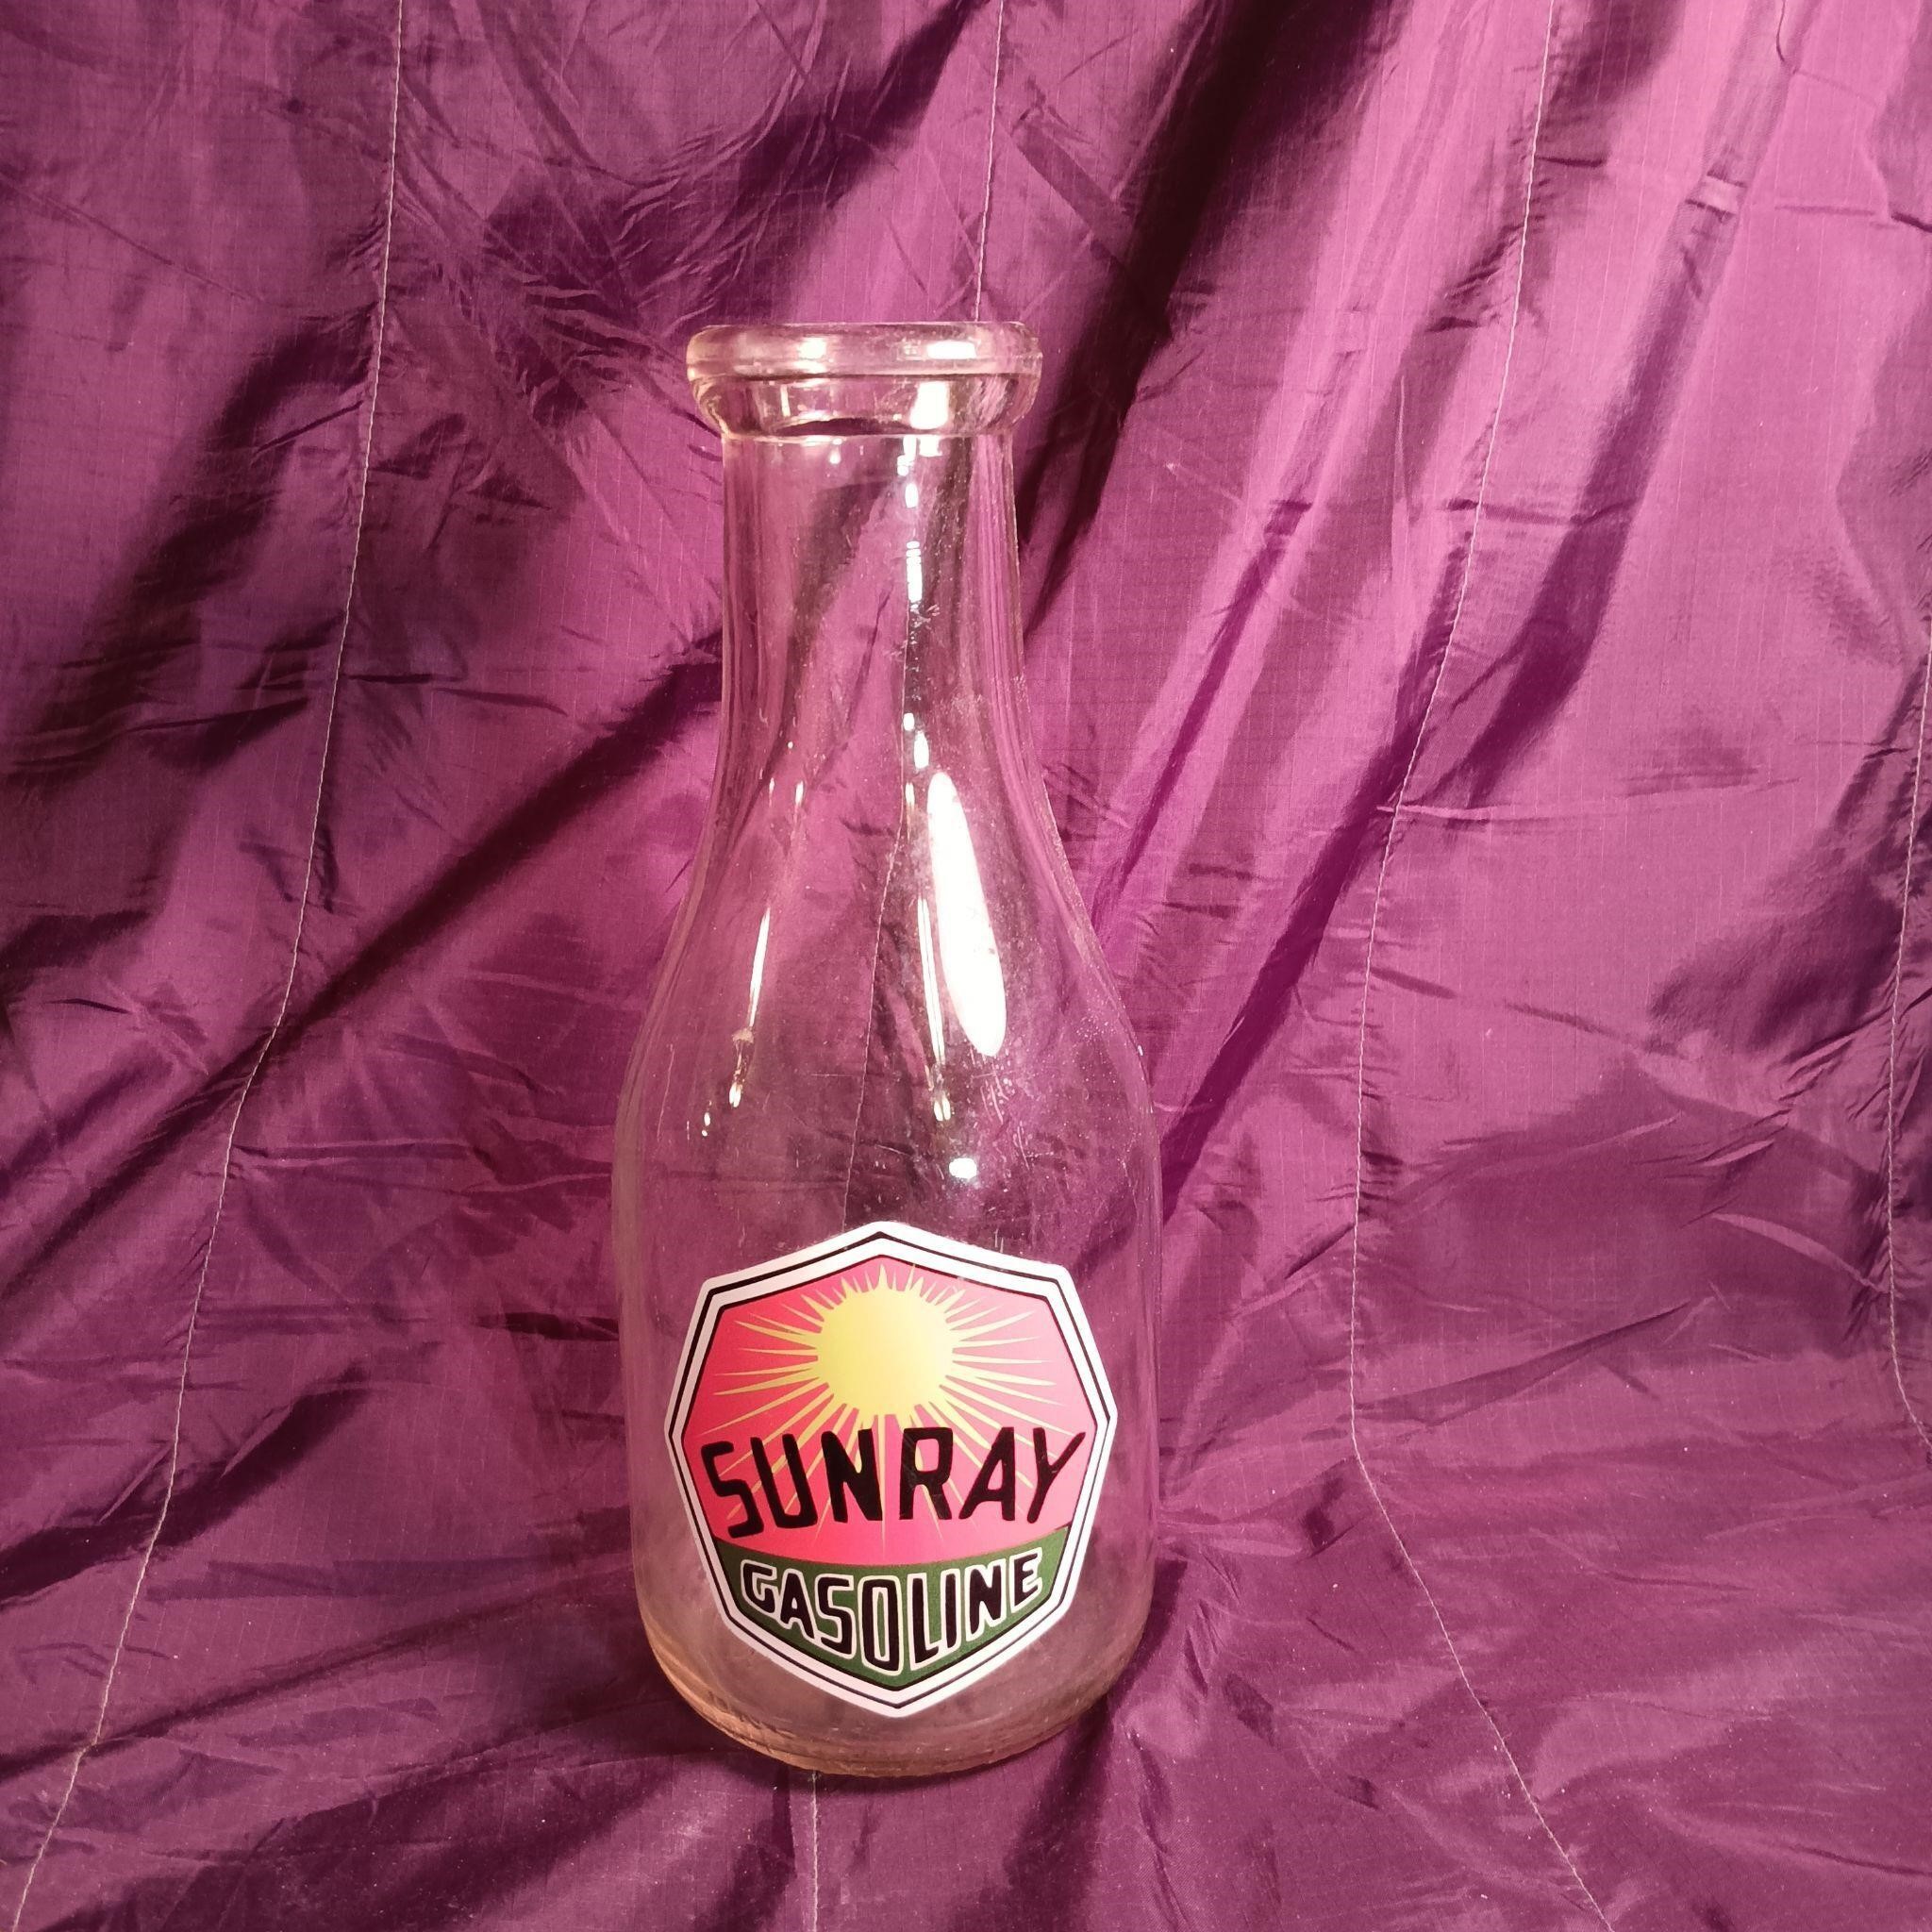 Sunray Gasoline sticker on Glass Milk bottle